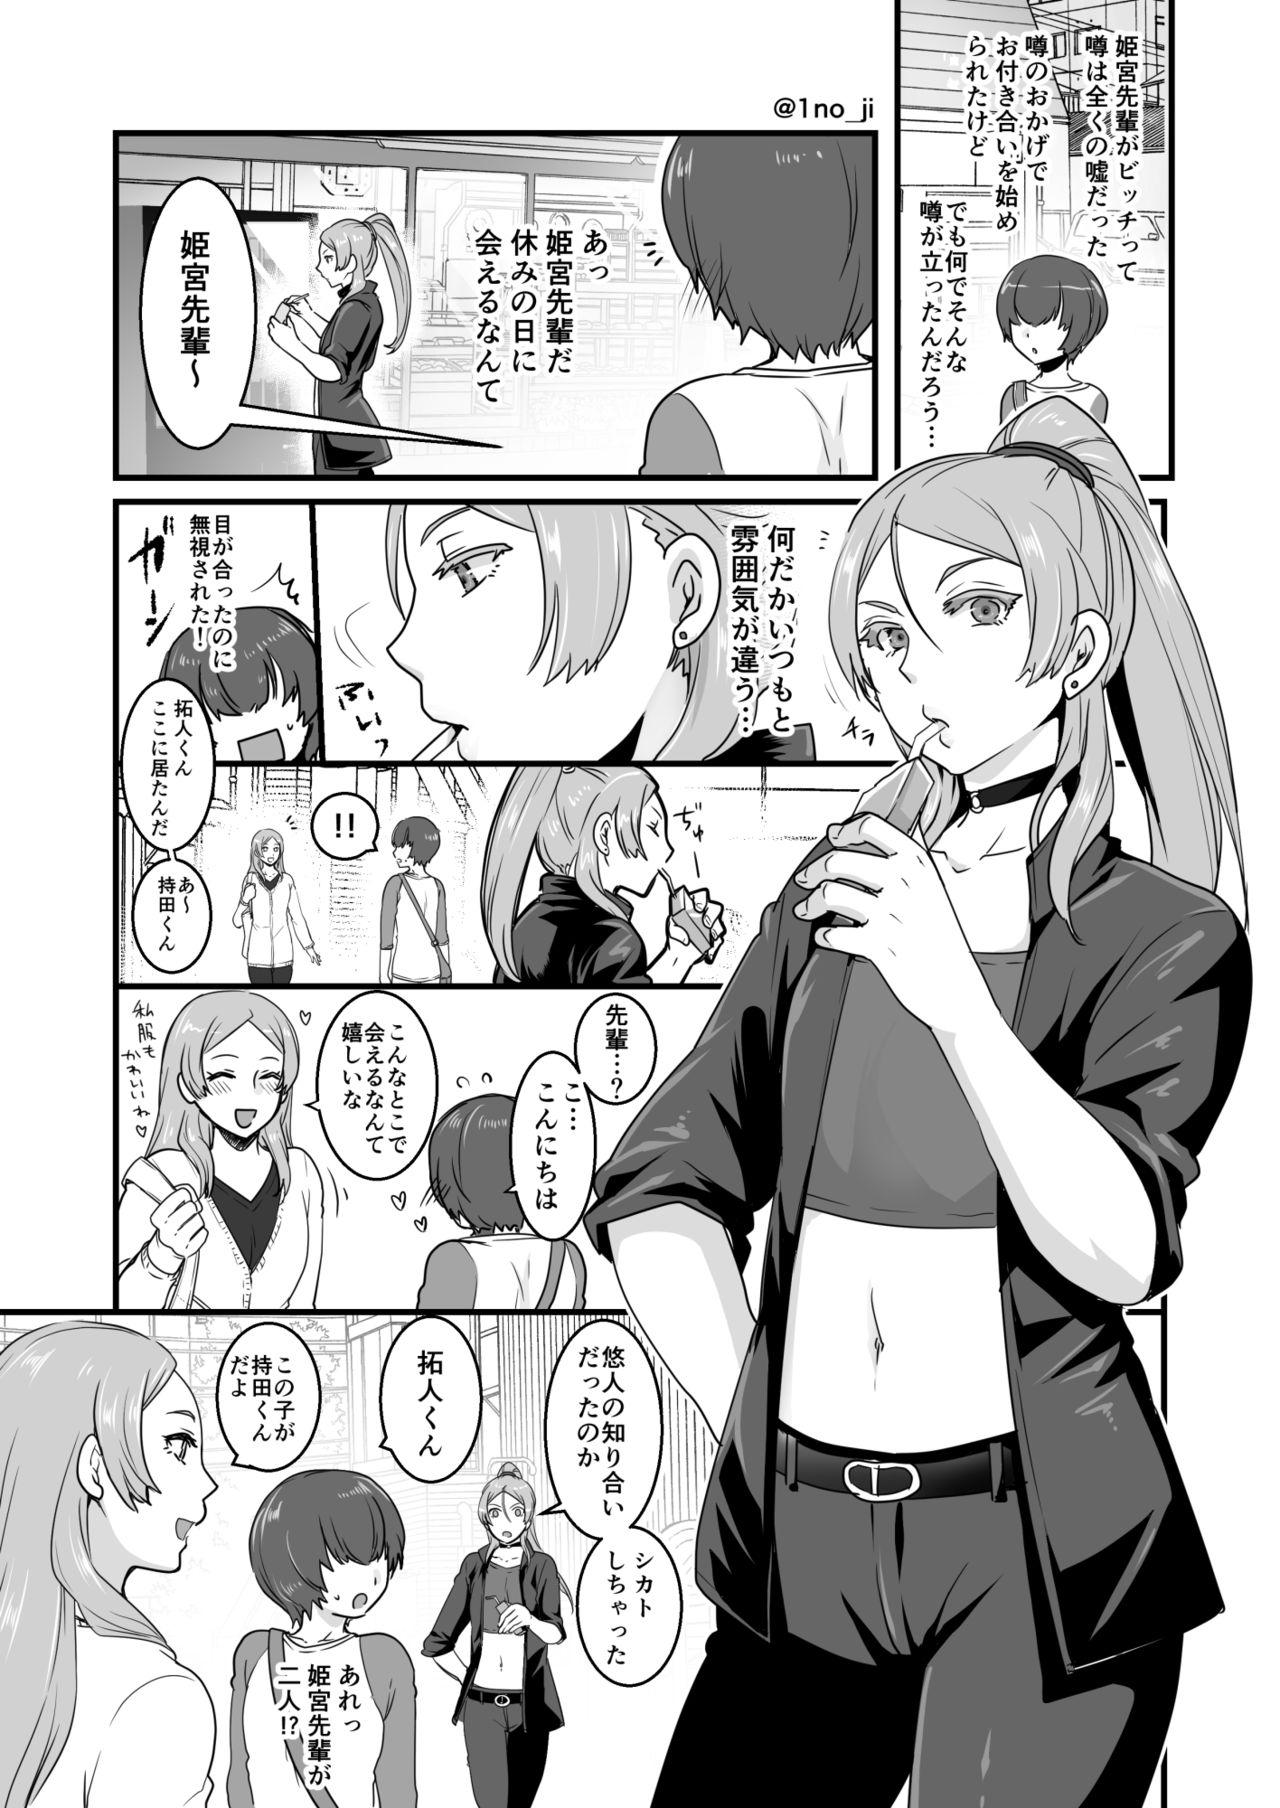 Throatfuck Himemiya senpai series - Original Anime - Page 6